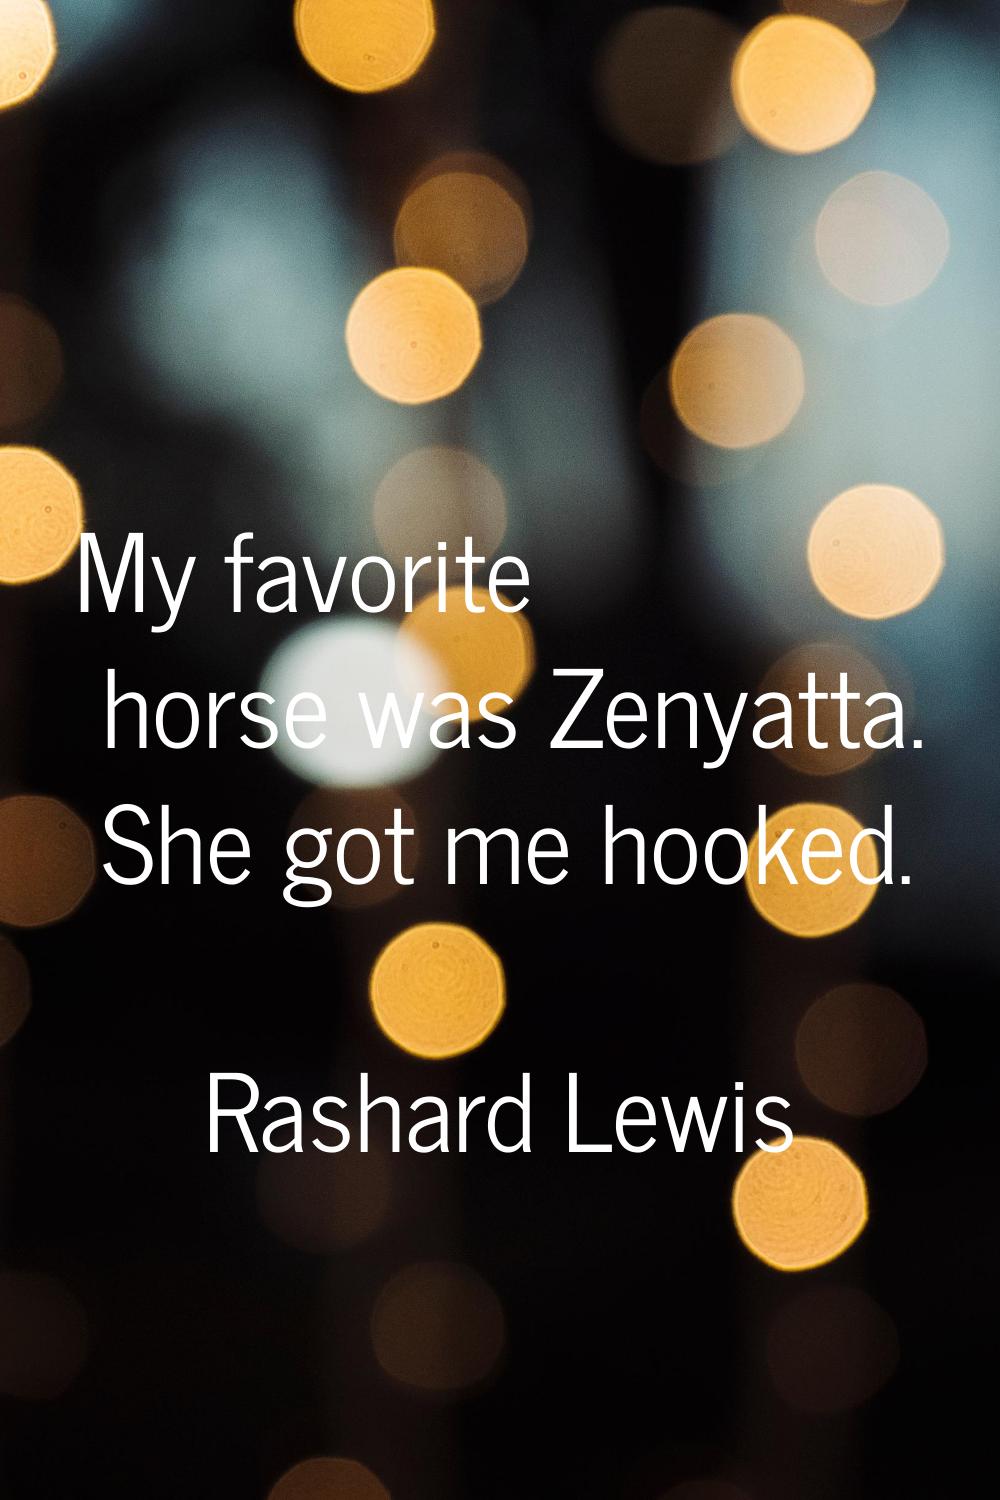 My favorite horse was Zenyatta. She got me hooked.